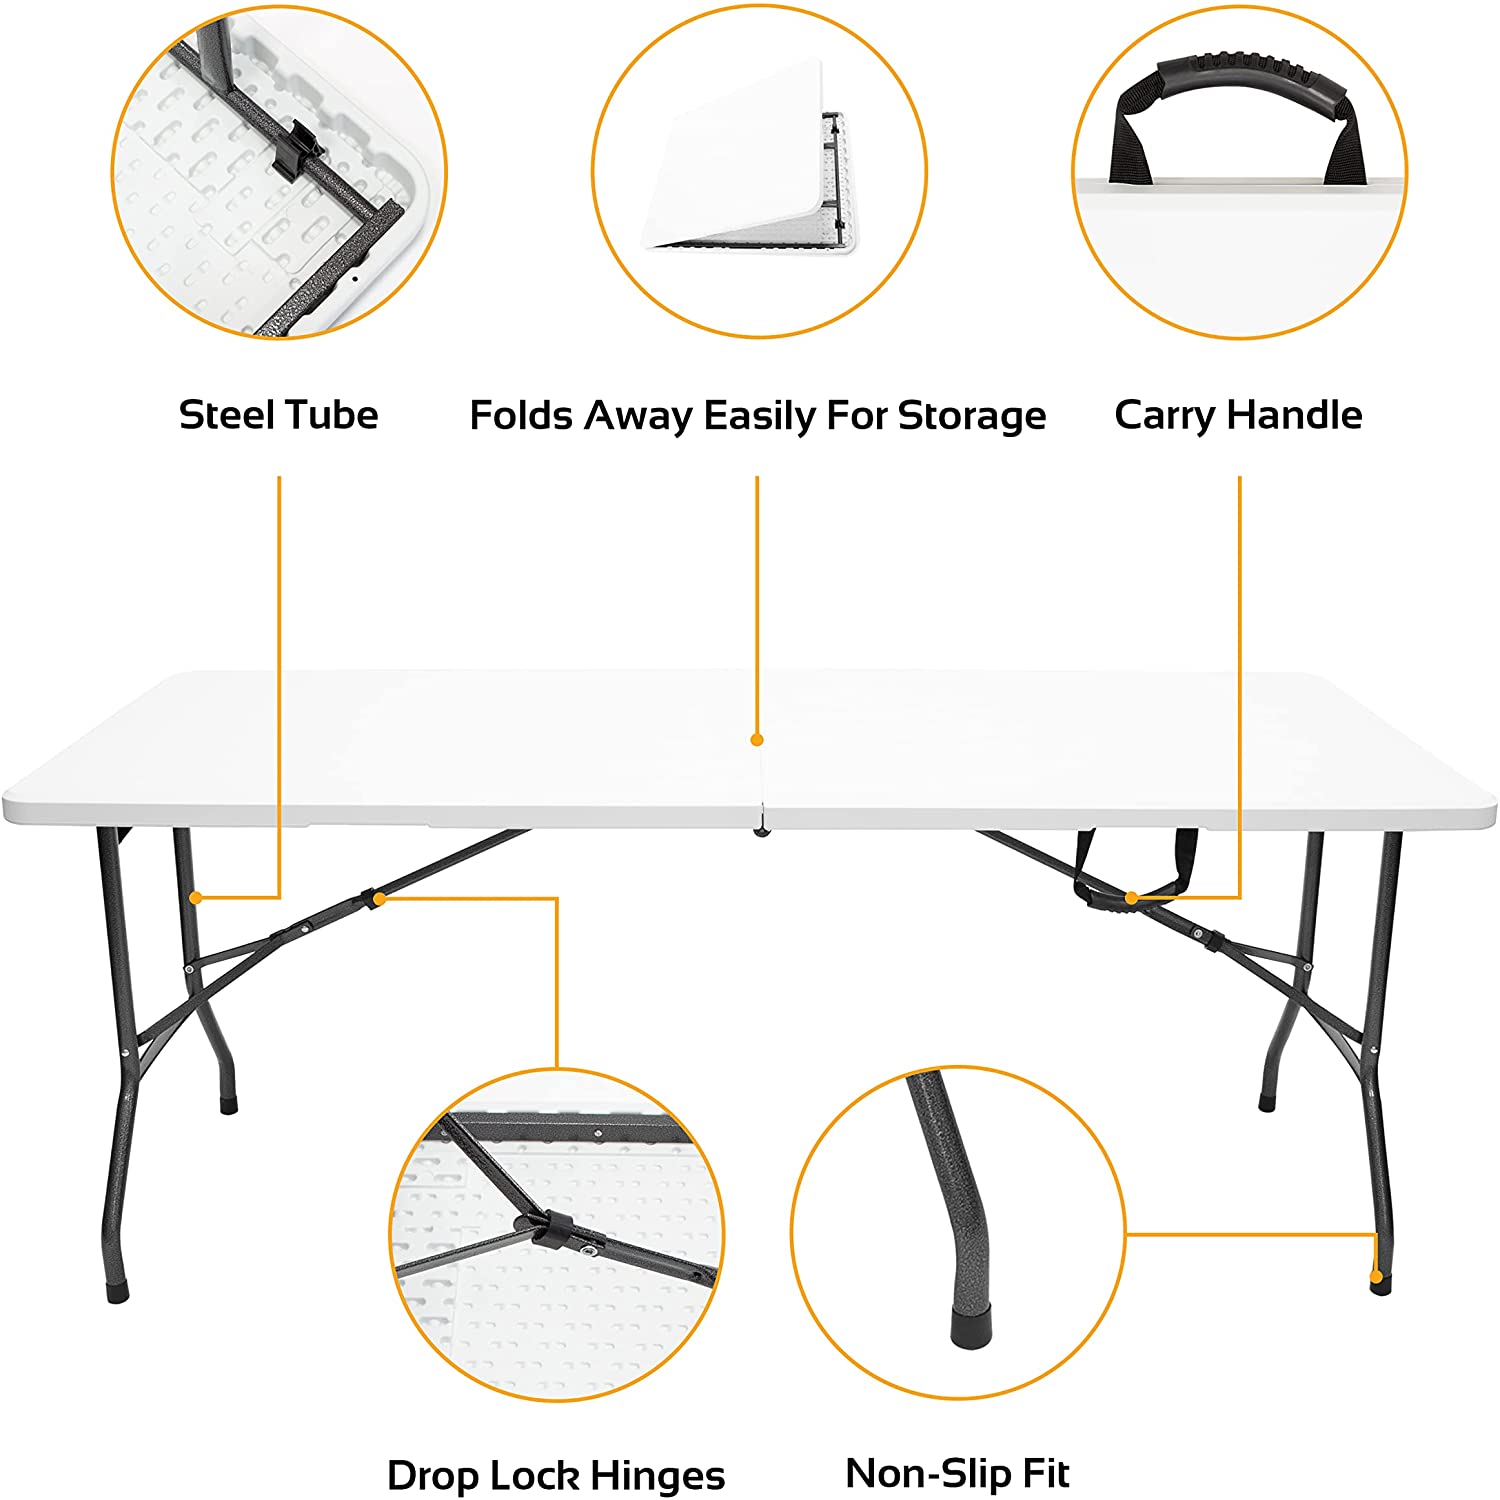 Indoor & Outdoor Rectangular Foldable Table 240 cm